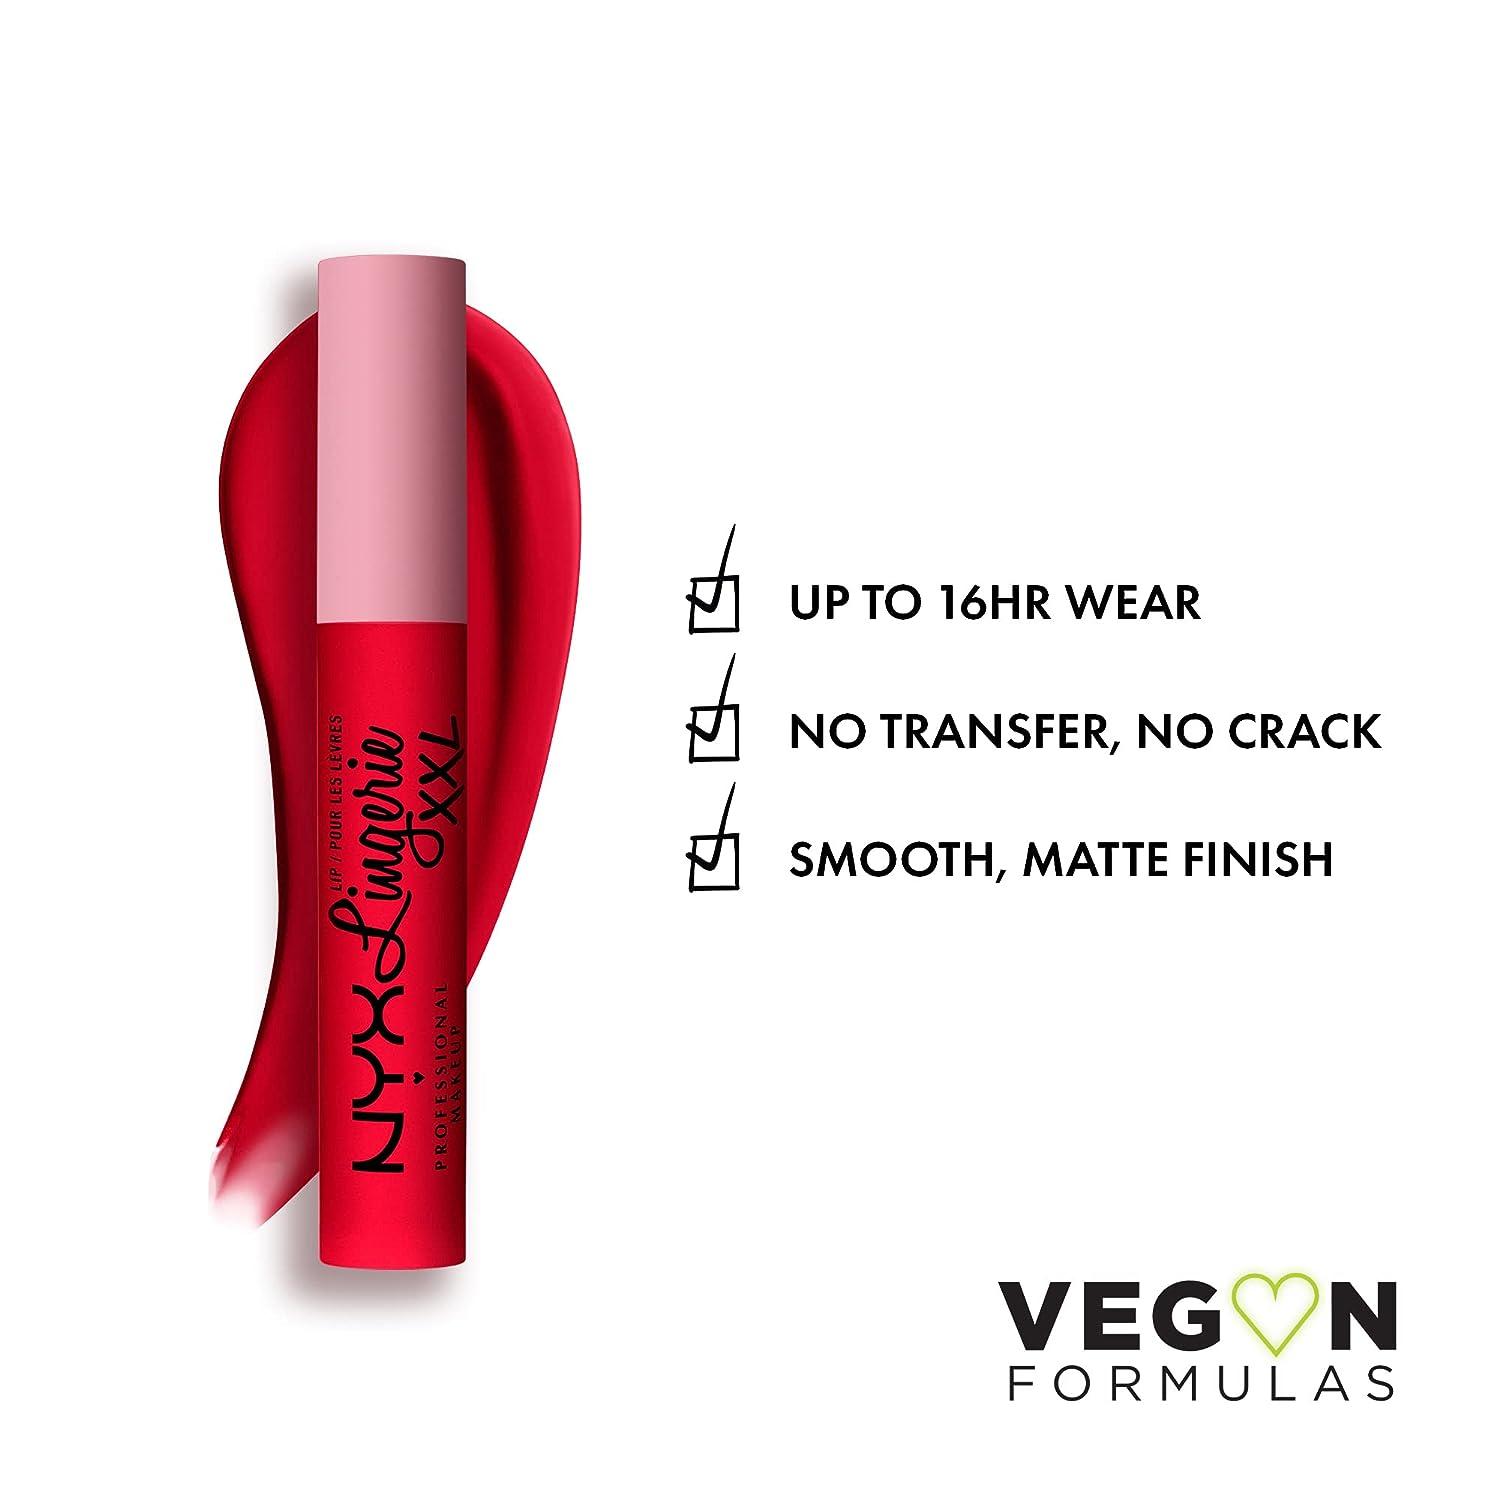 NYX PROFESSIONAL MAKEUP Lip Lingerie XXL Matte Liquid Lipstick - Untamable  (Brick Red) 28 Untamable 0.13 Fl Oz (Pack of 1)